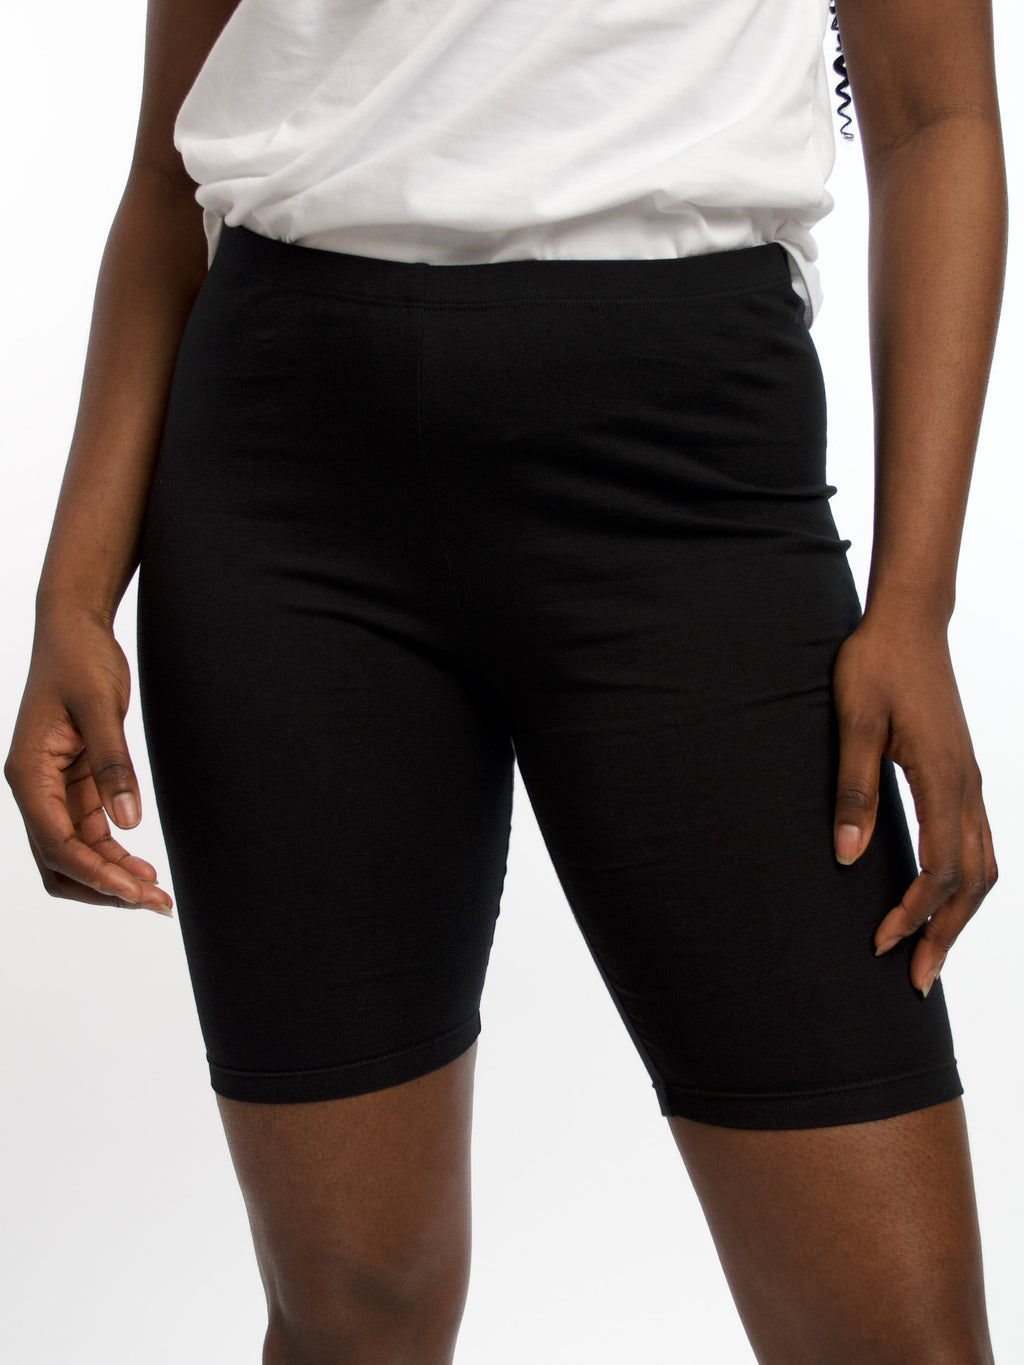 NexiEpoch 2 Pack Plus Size Biker Shorts for Women – 5- 8 High